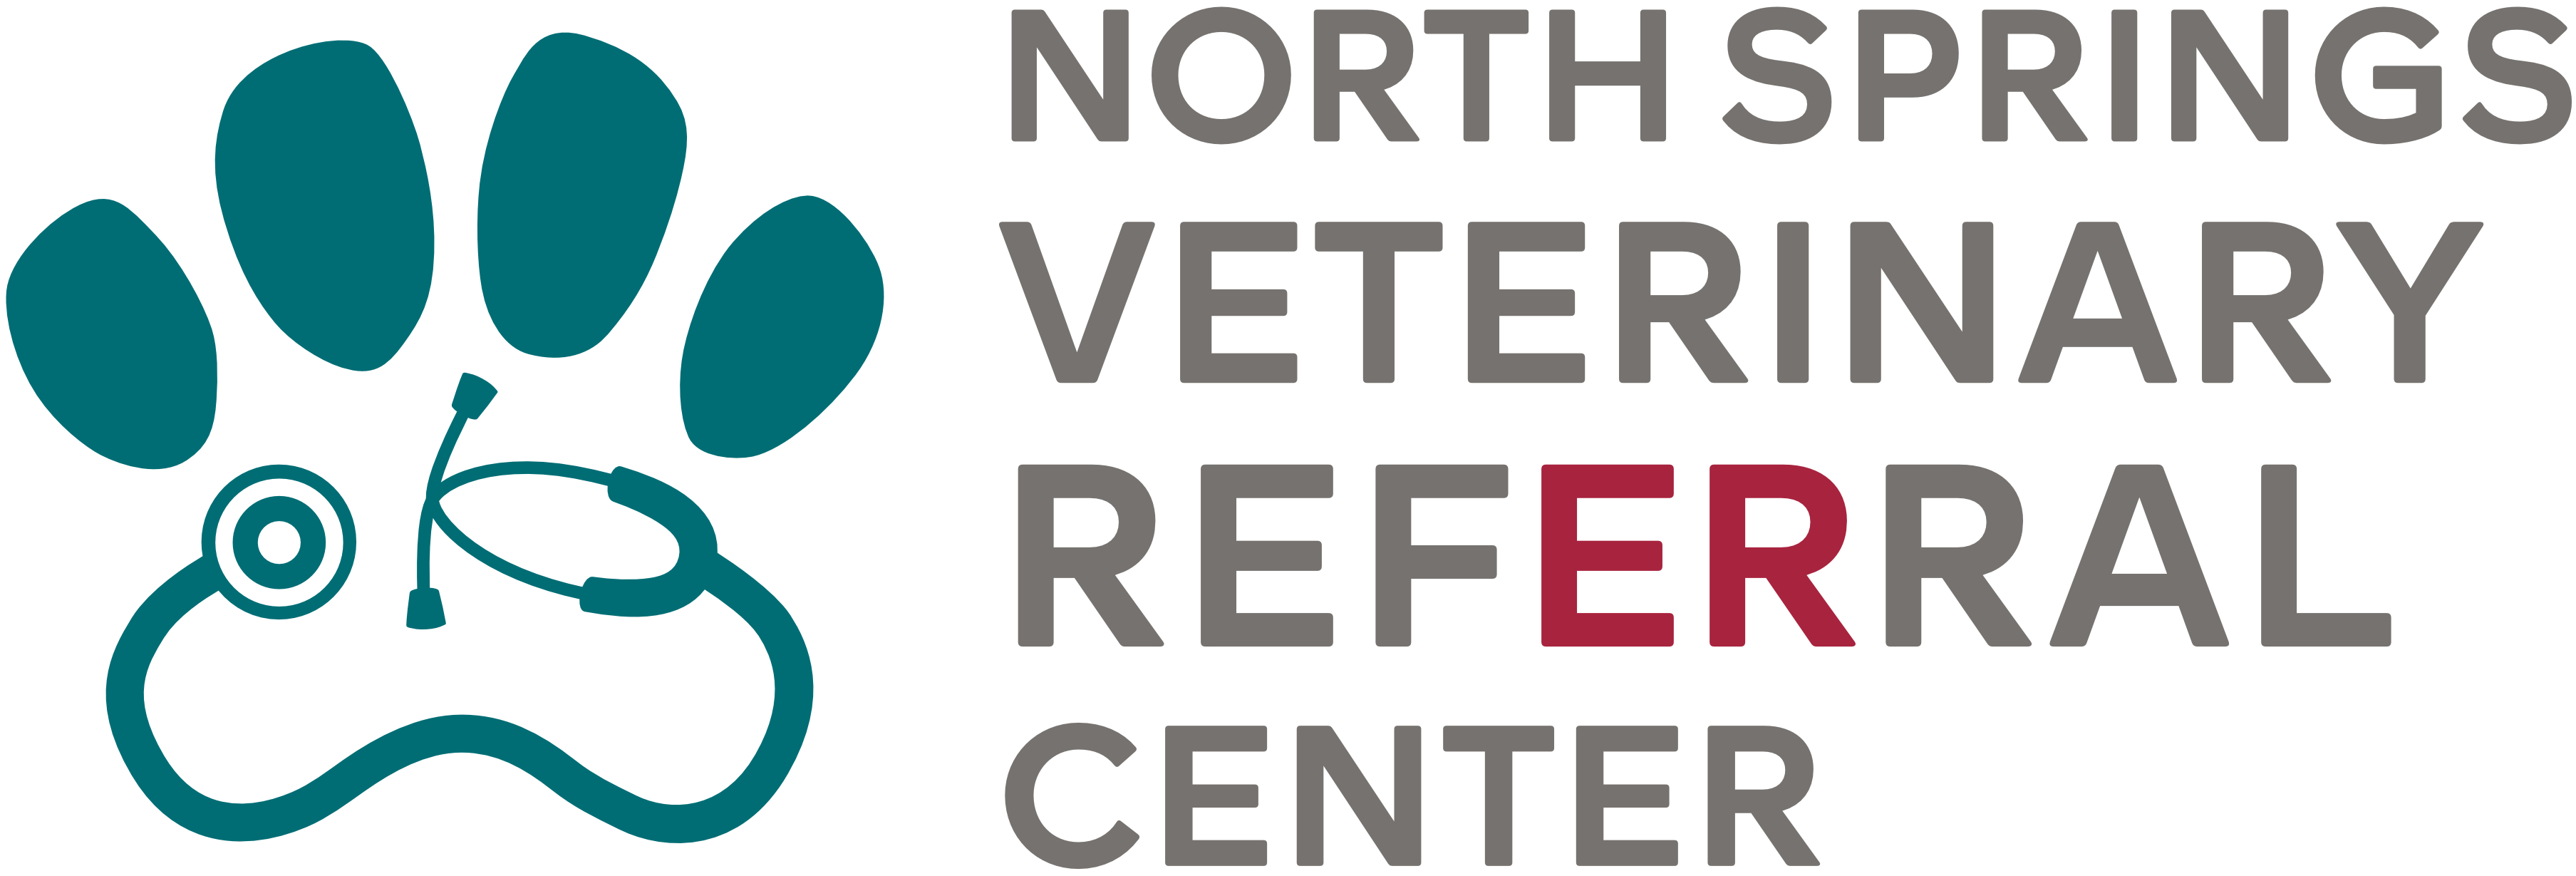 North Springs Veterinary Referral Center